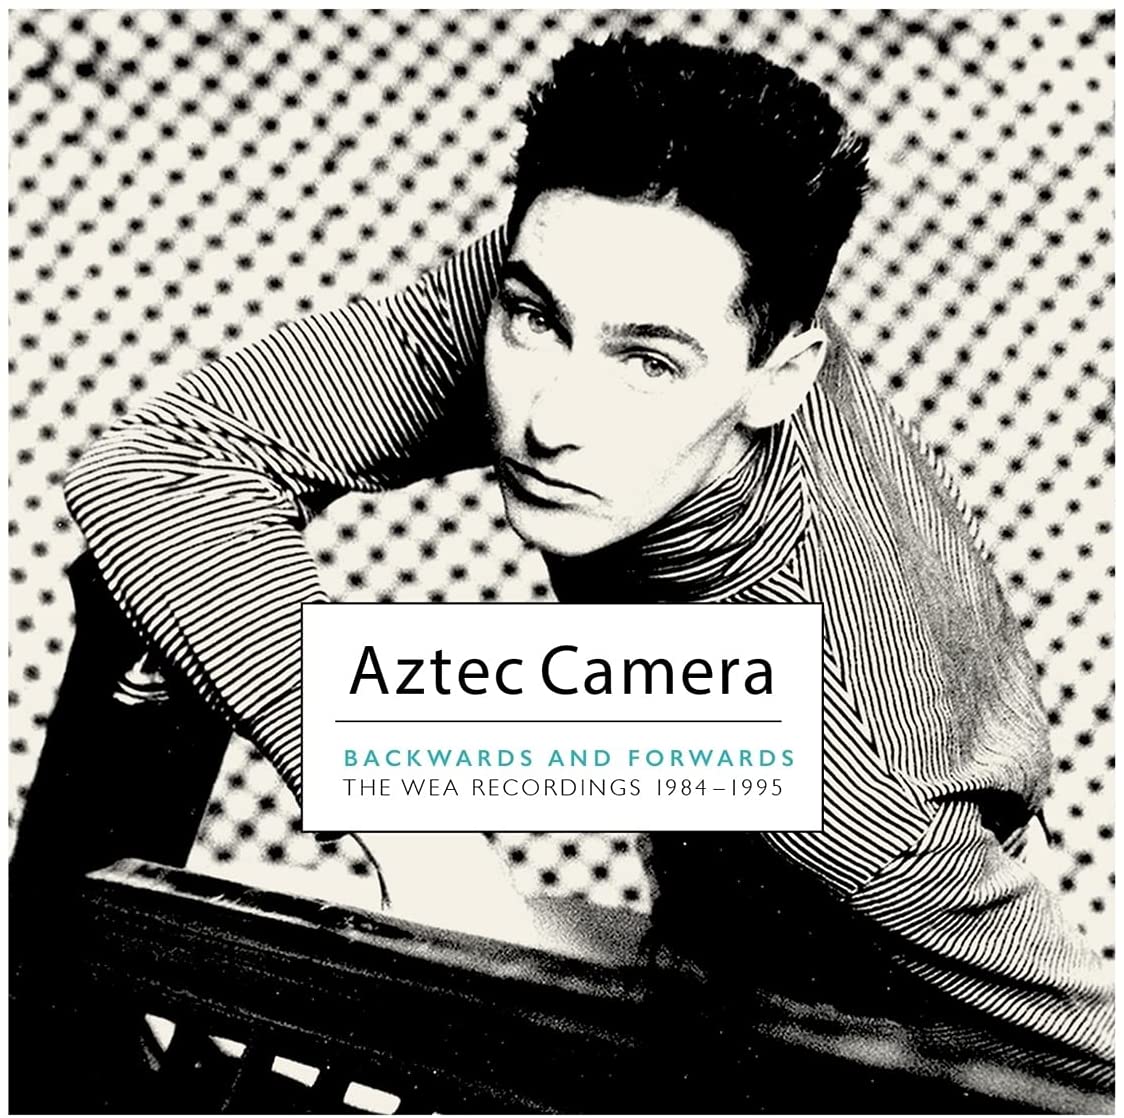 Aztec Camera - Backwards & Forwards (The Wea Recordings 1984-1995) - 9CD